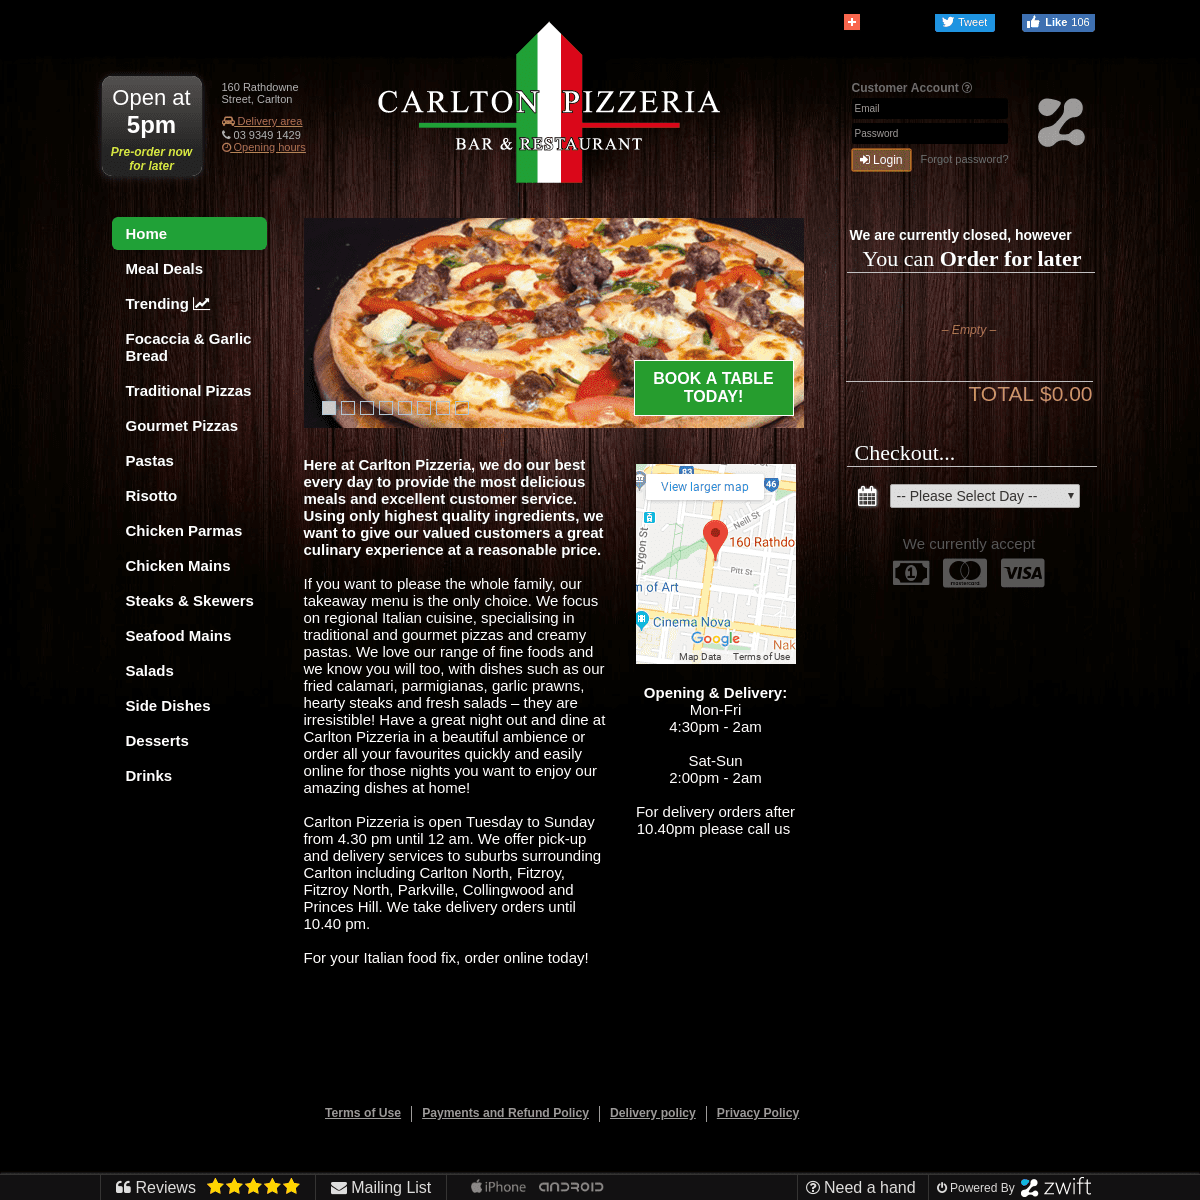 A complete backup of carltonpizzeria.com.au